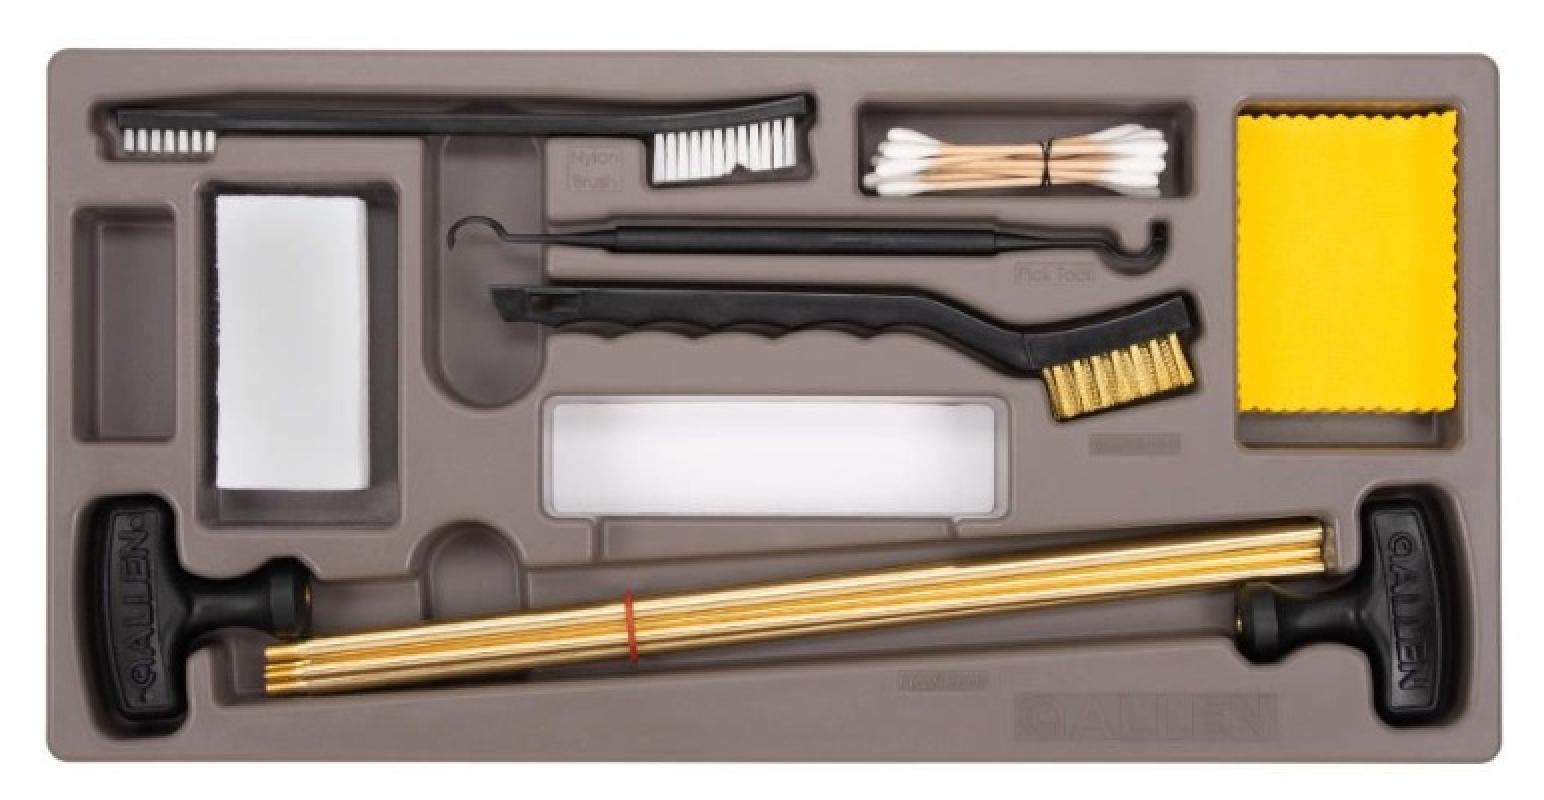 Allen Tool Box Gun Cleaning Kit